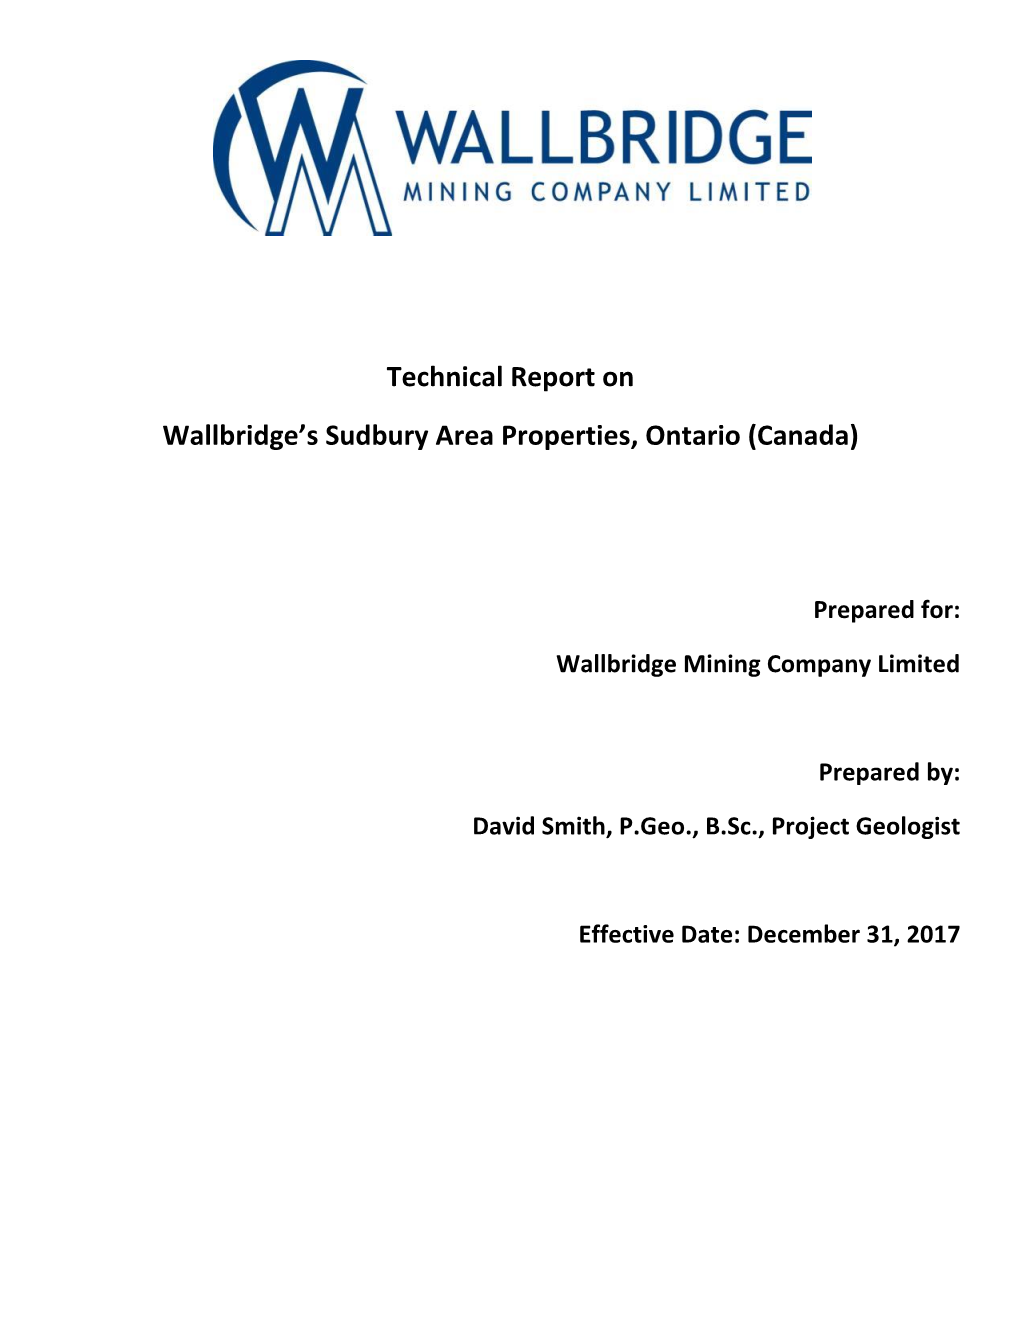 Technical Report on Wallbridge's Sudbury Area Properties, Ontario